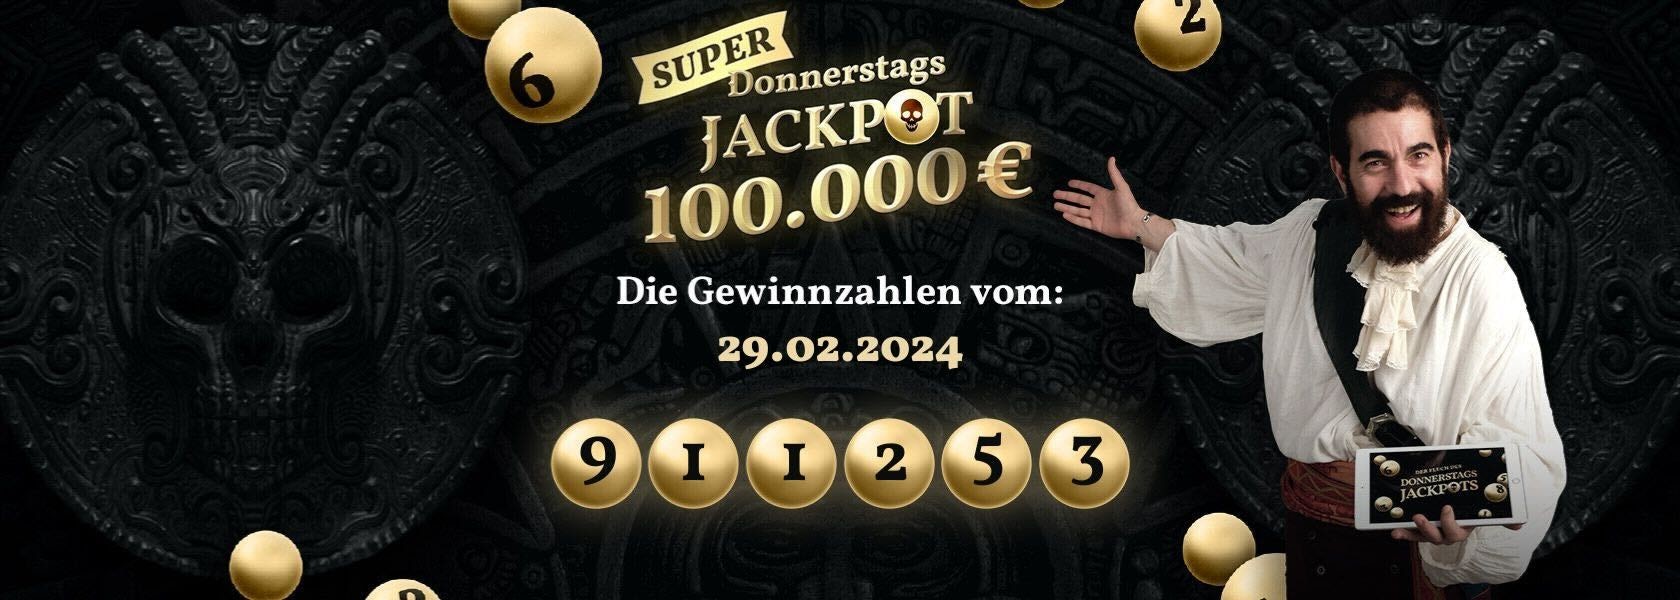 jackpot-heute-super-donnerstag-29022024